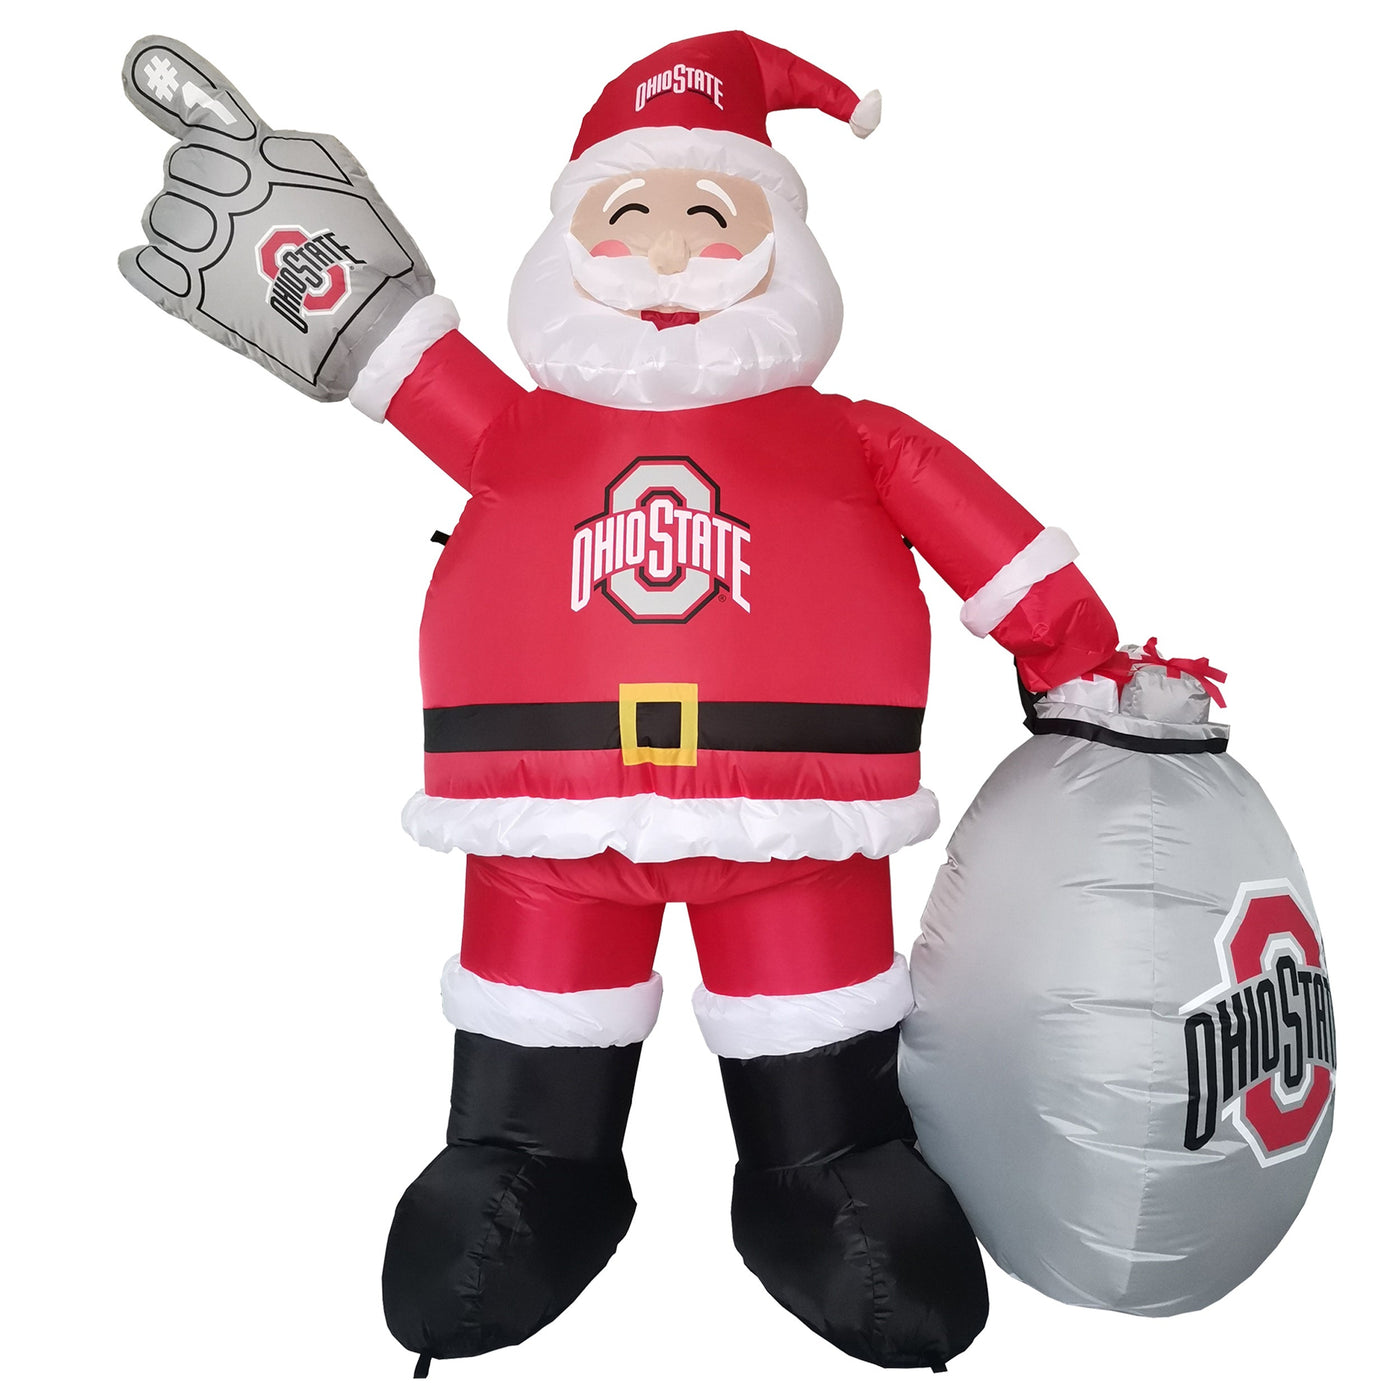 Ohio State Santa Claus Yard Inflatable